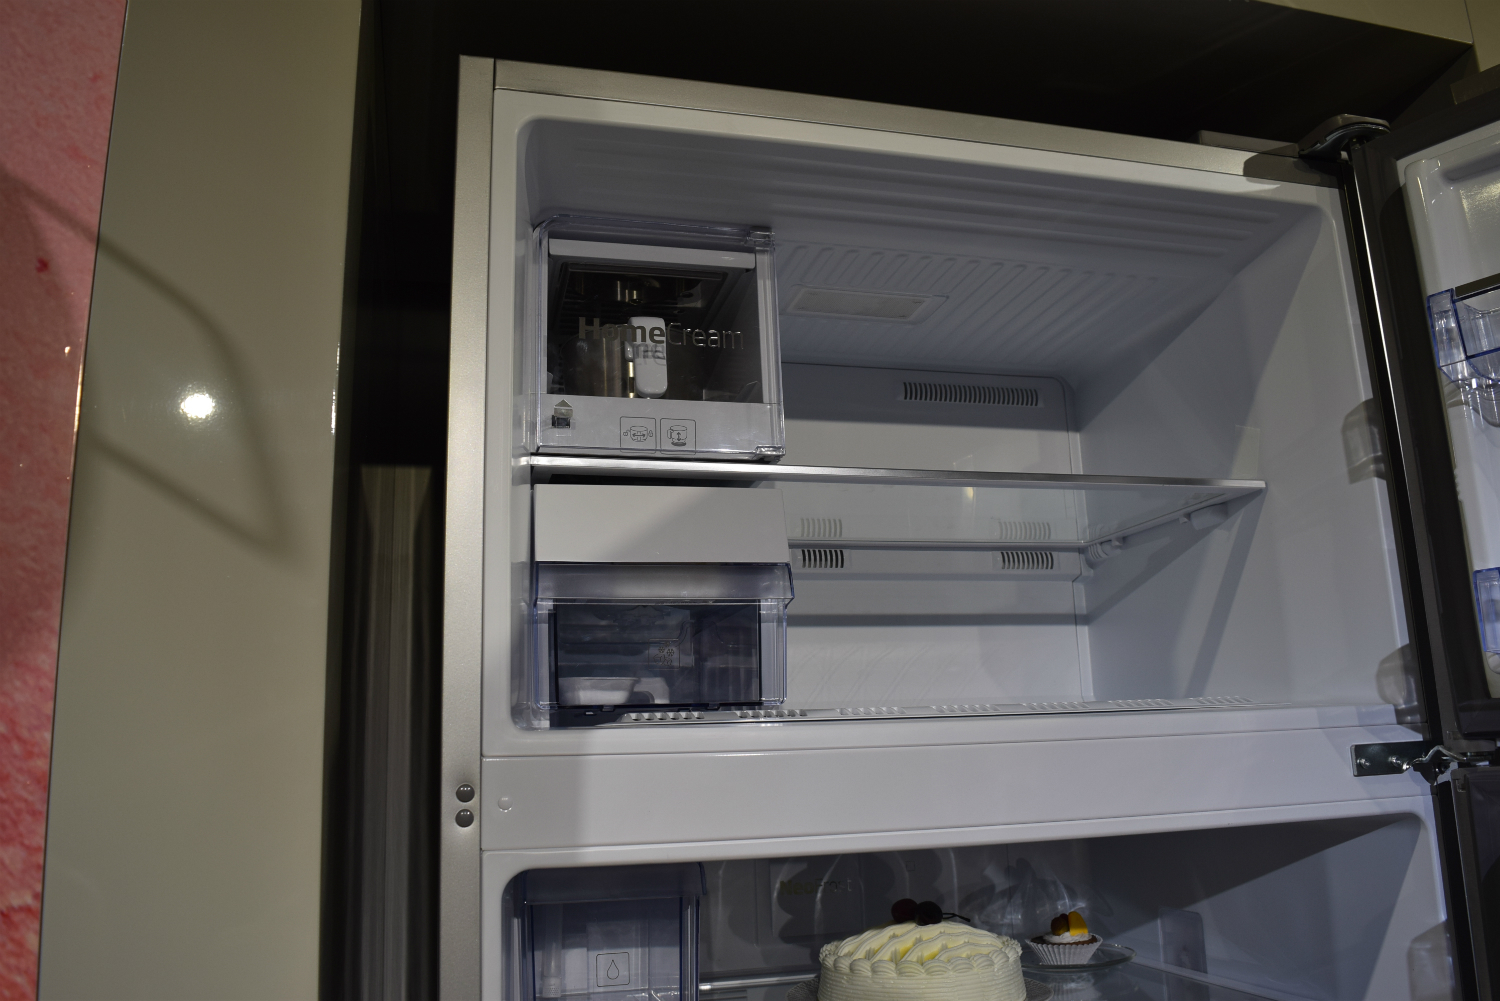 bekos homecream fridge has a built in ice cream maker beko 5